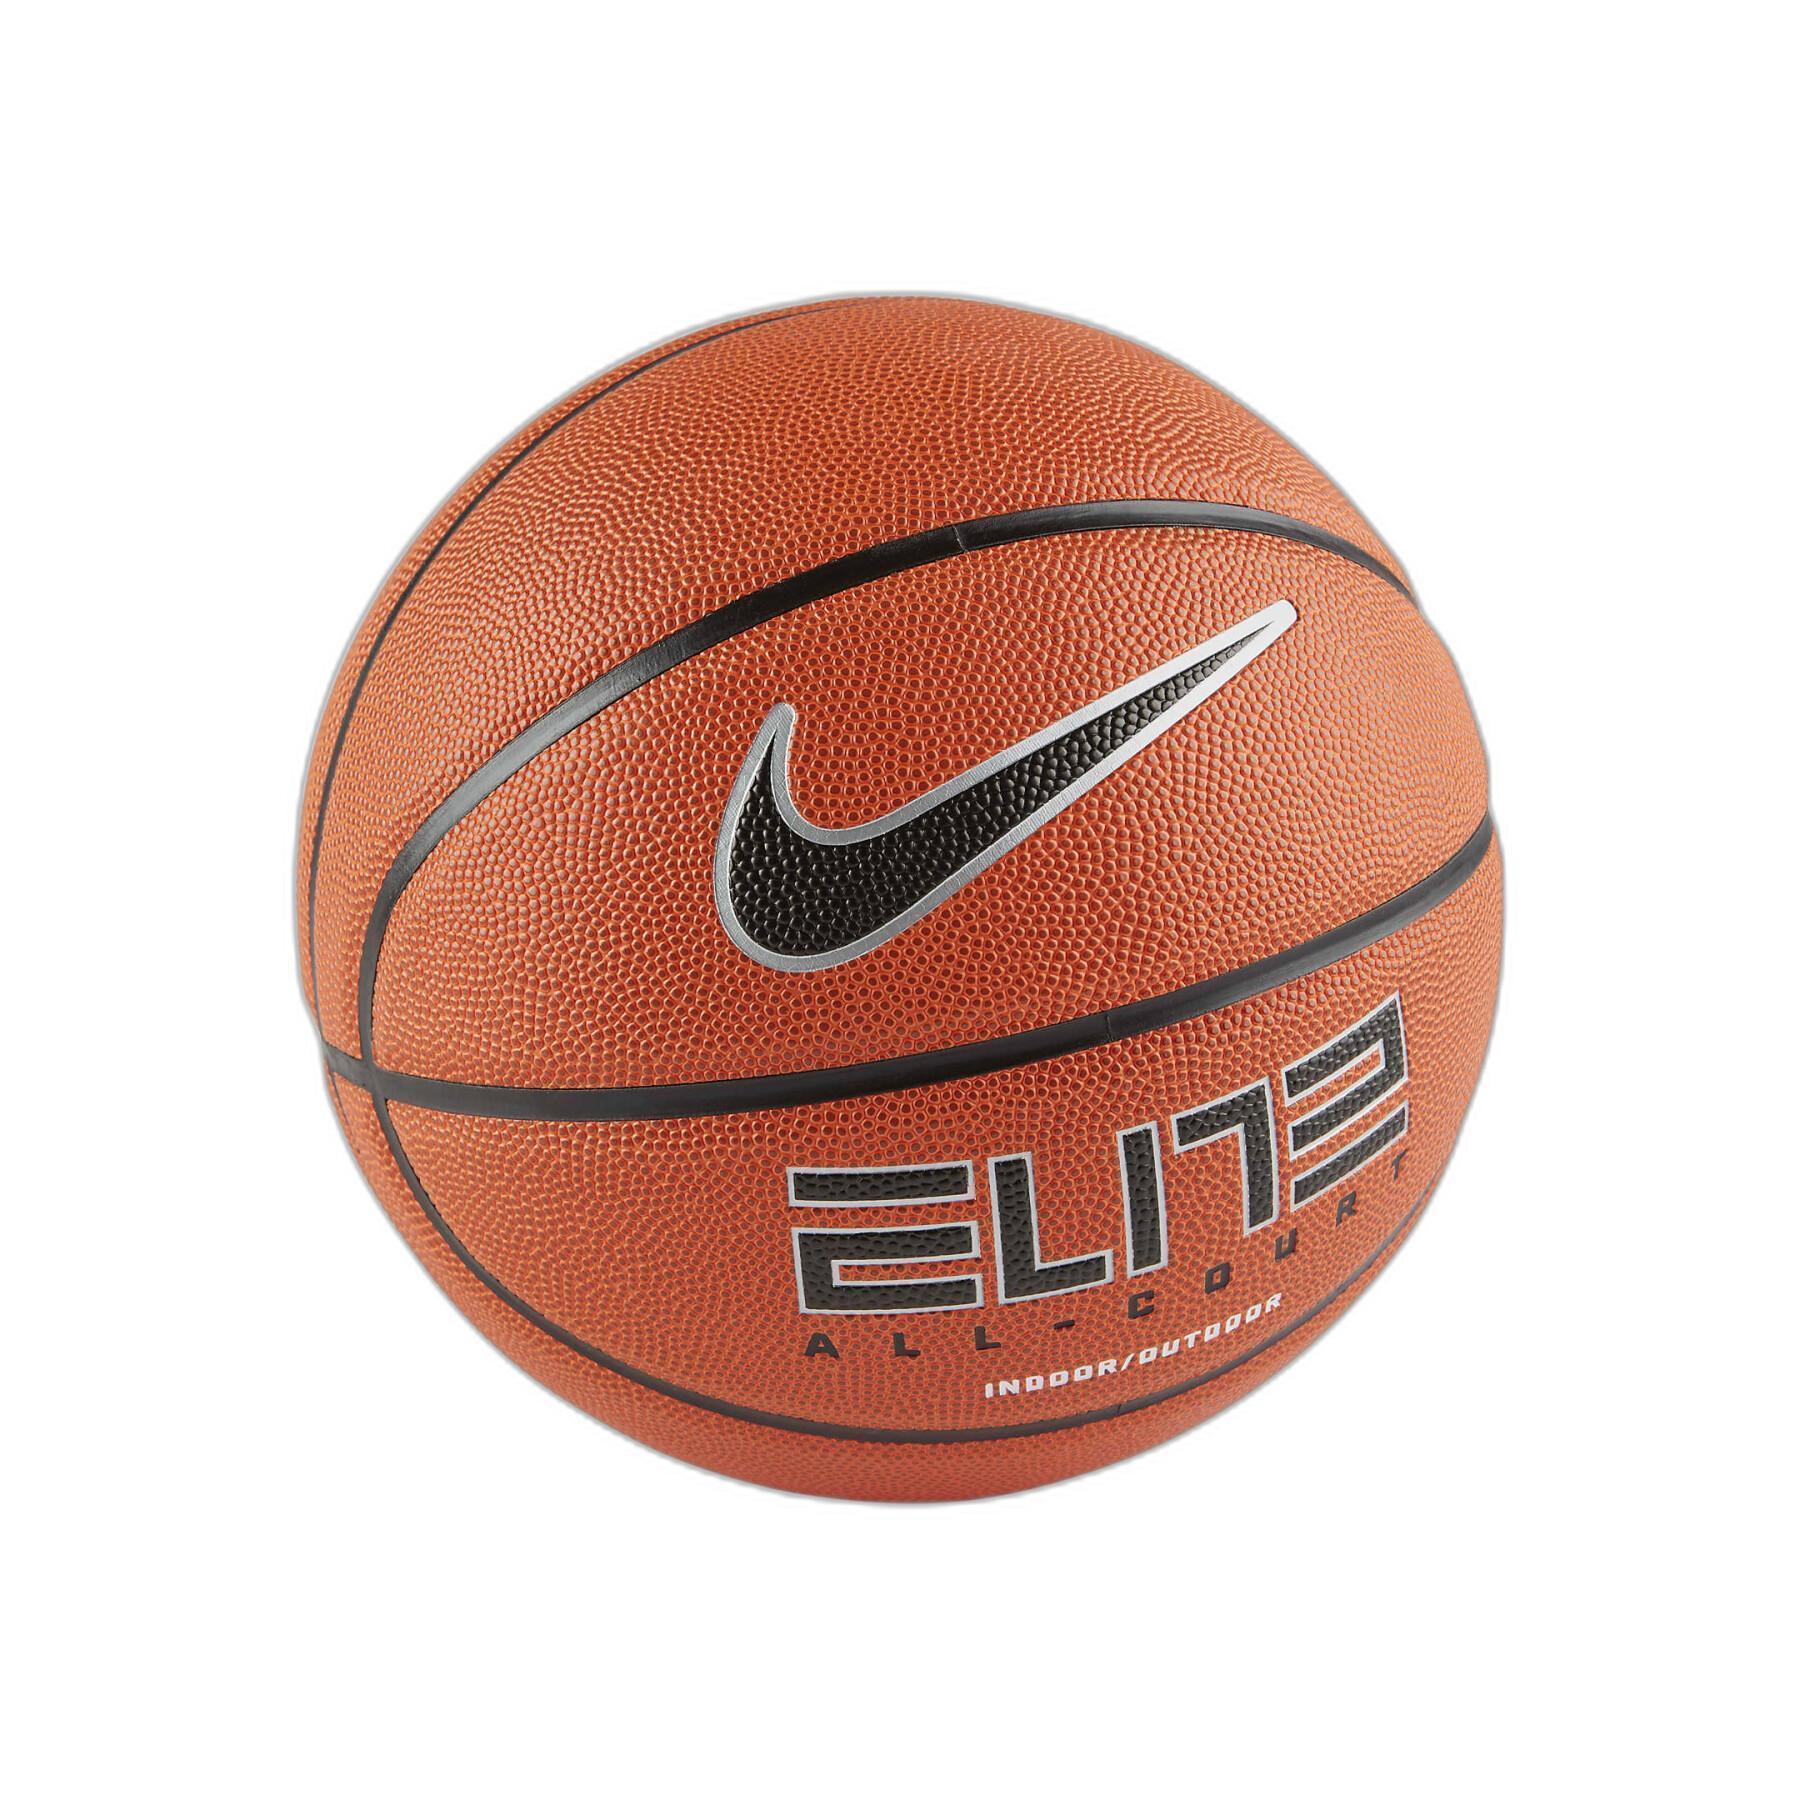 Basketball Nike All Court 8P 2.0 - Nike - Brands - Balloons